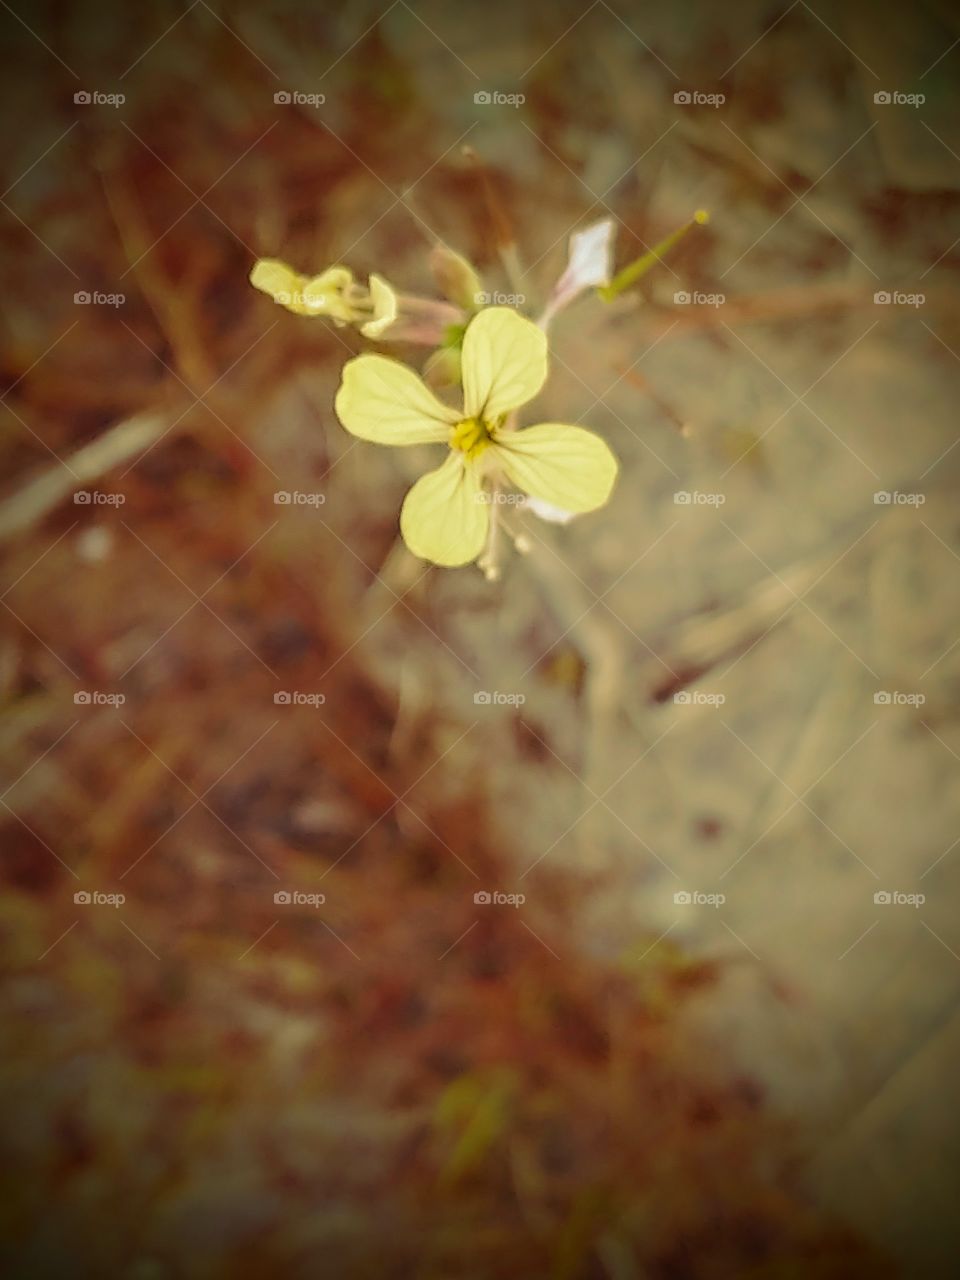 yellow wild flower springing